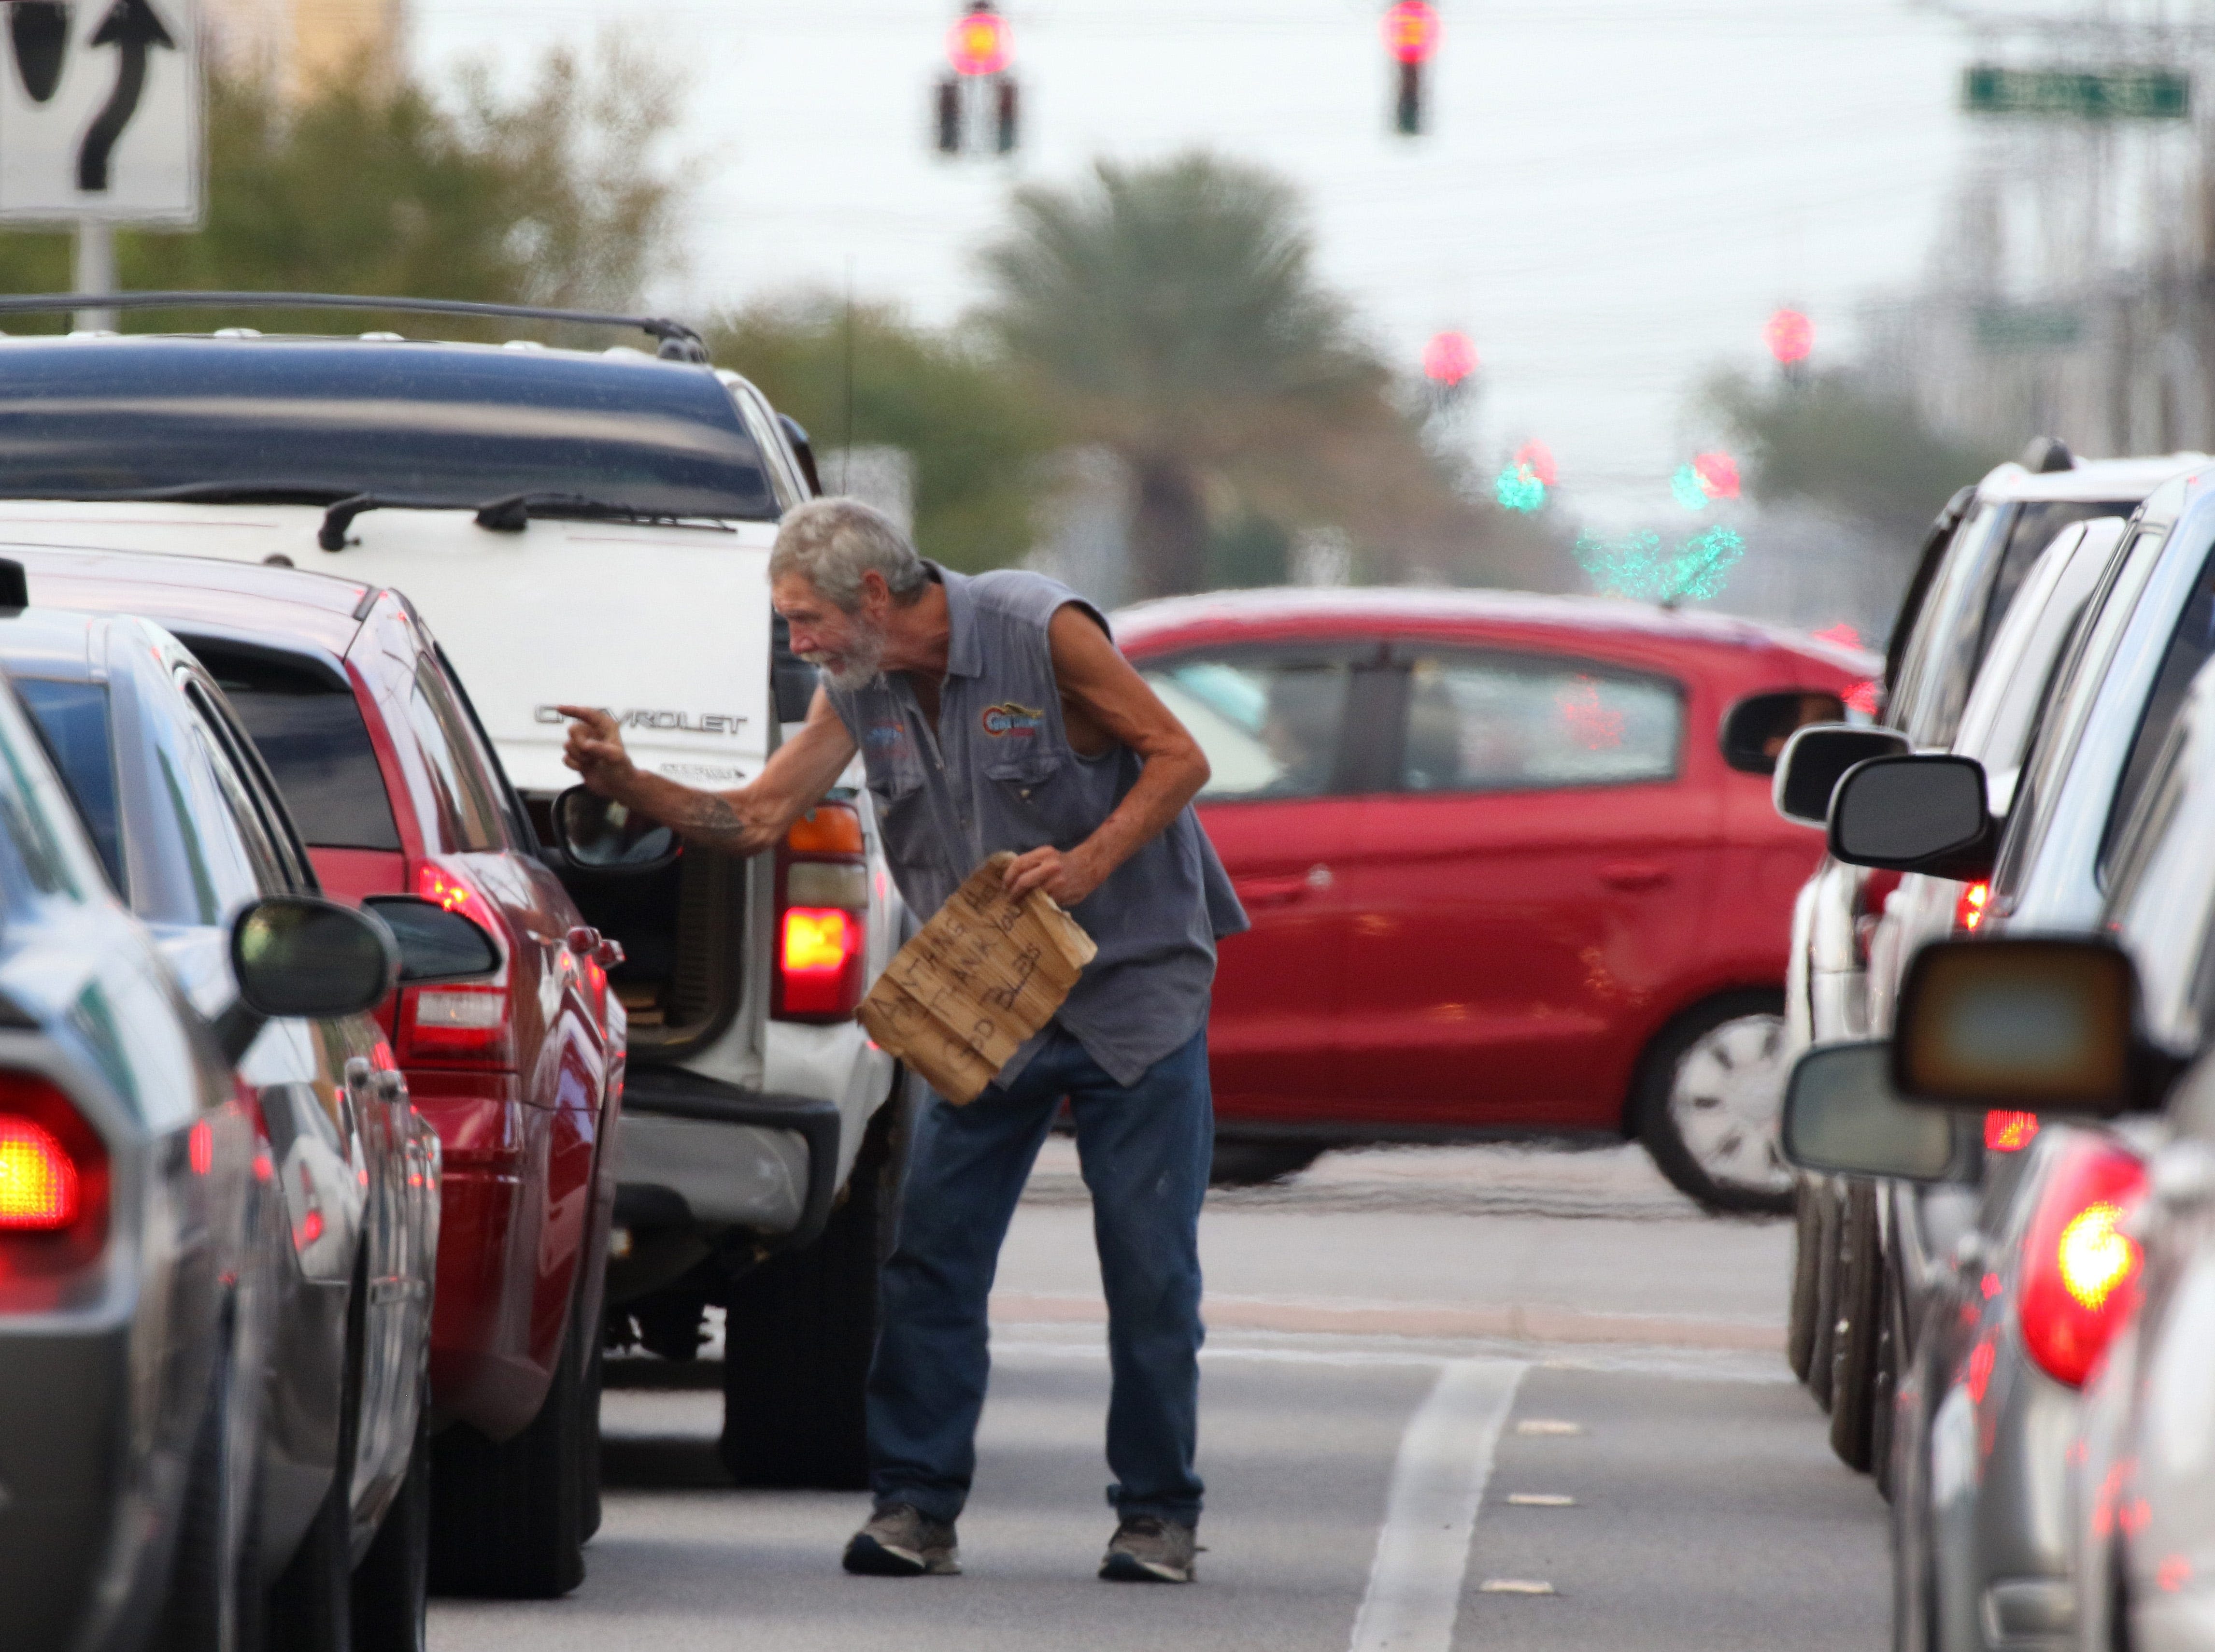 Judge permanently blocks Daytona's anti-panhandling ordinance calling it unconstitutional